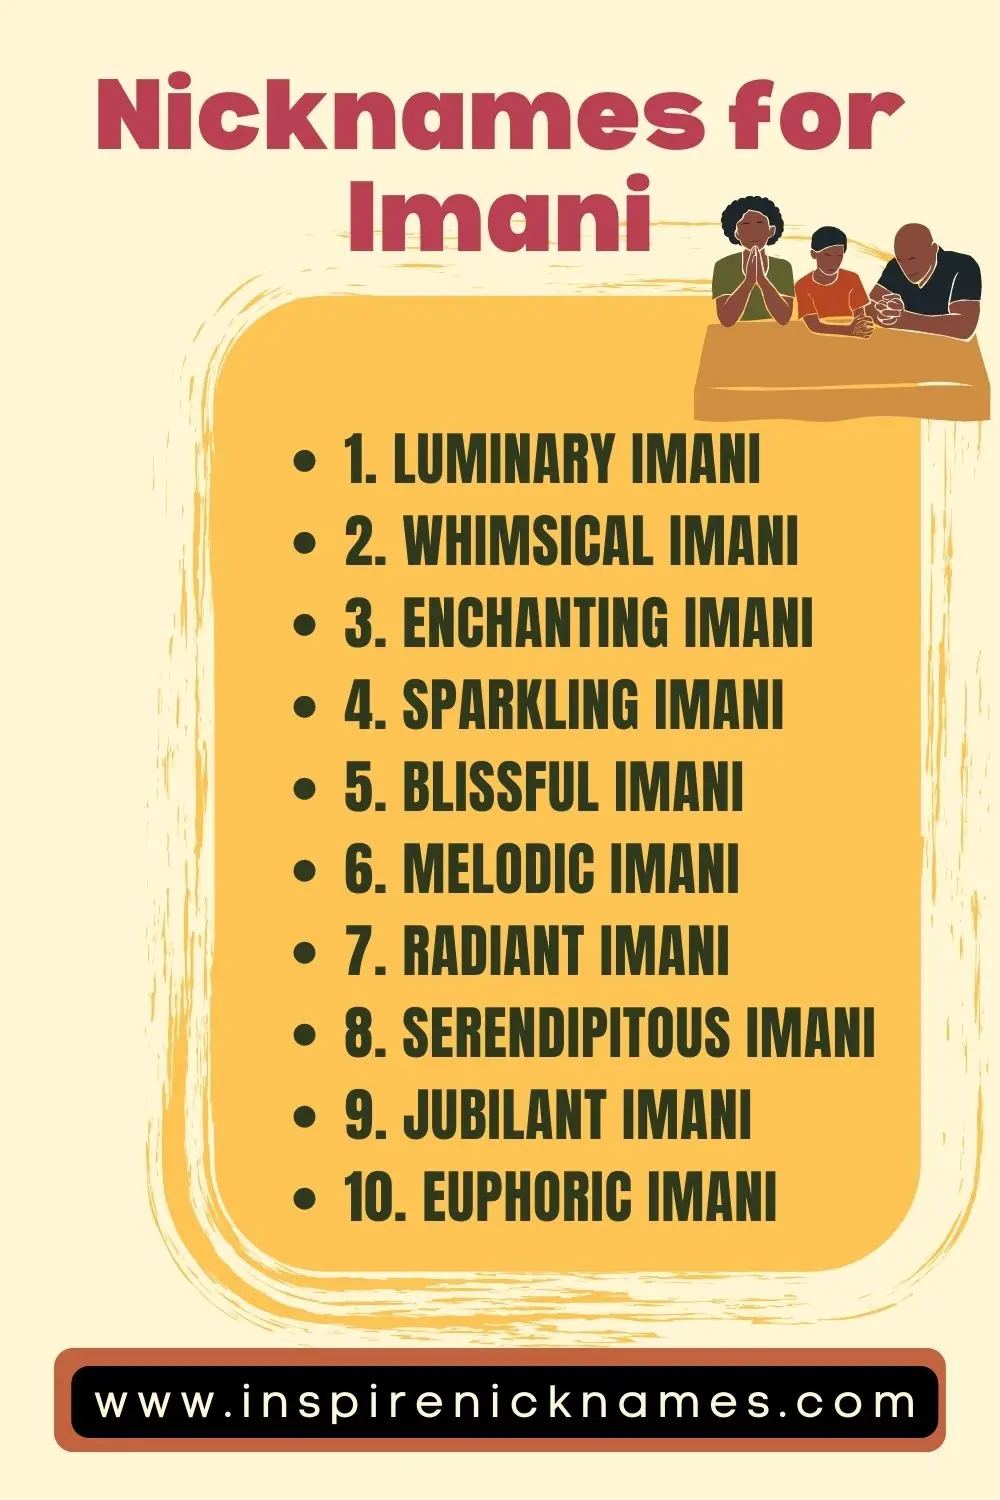 nicknames for Imani list ideas